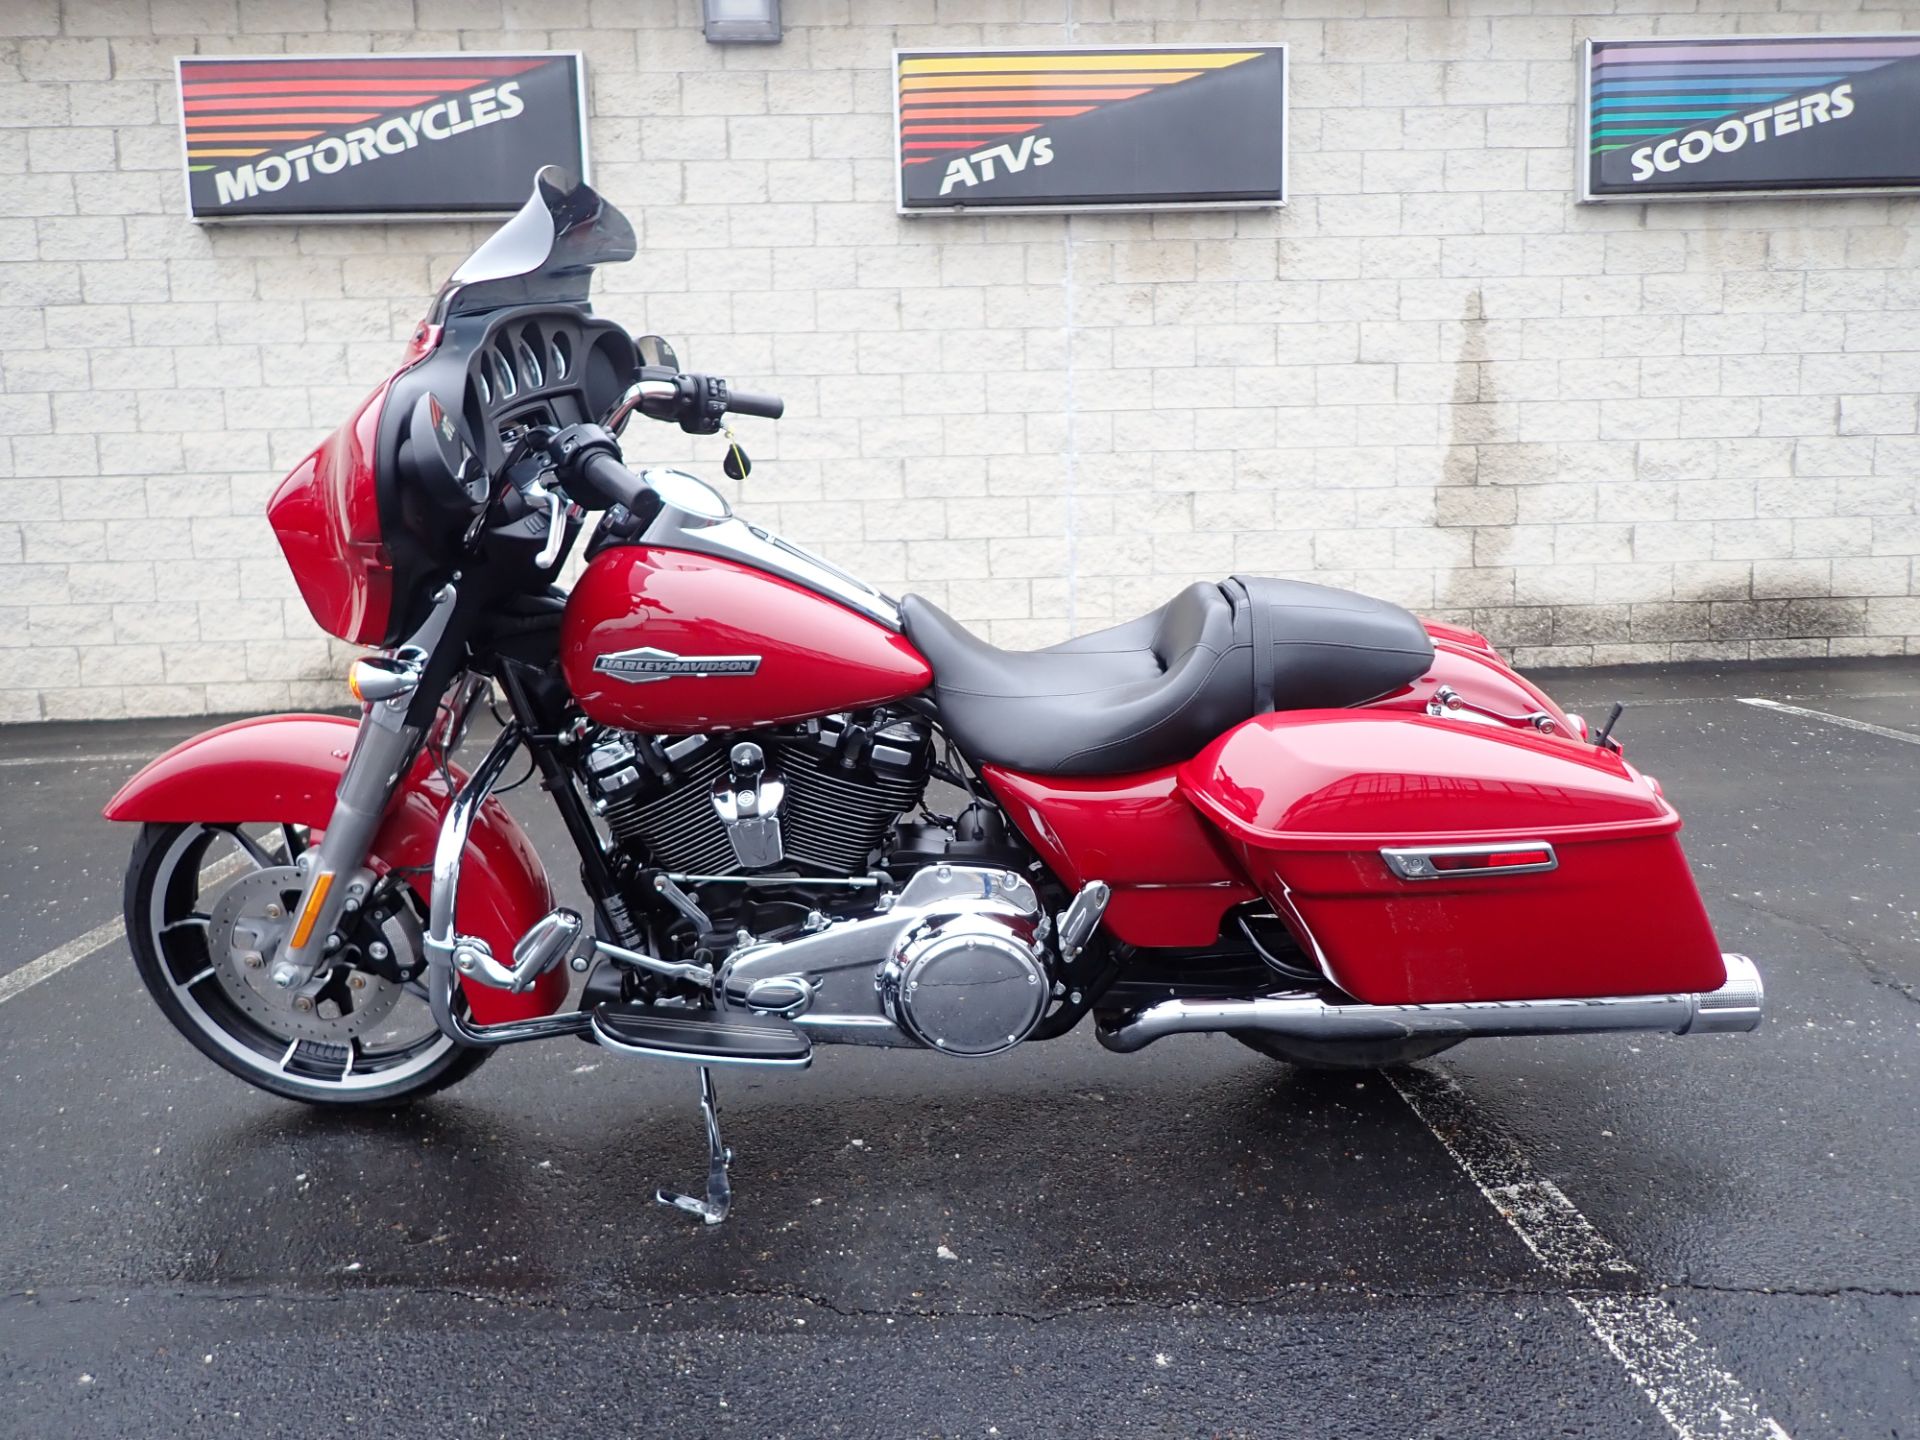 2021 Harley-Davidson Street Glide® in Massillon, Ohio - Photo 6